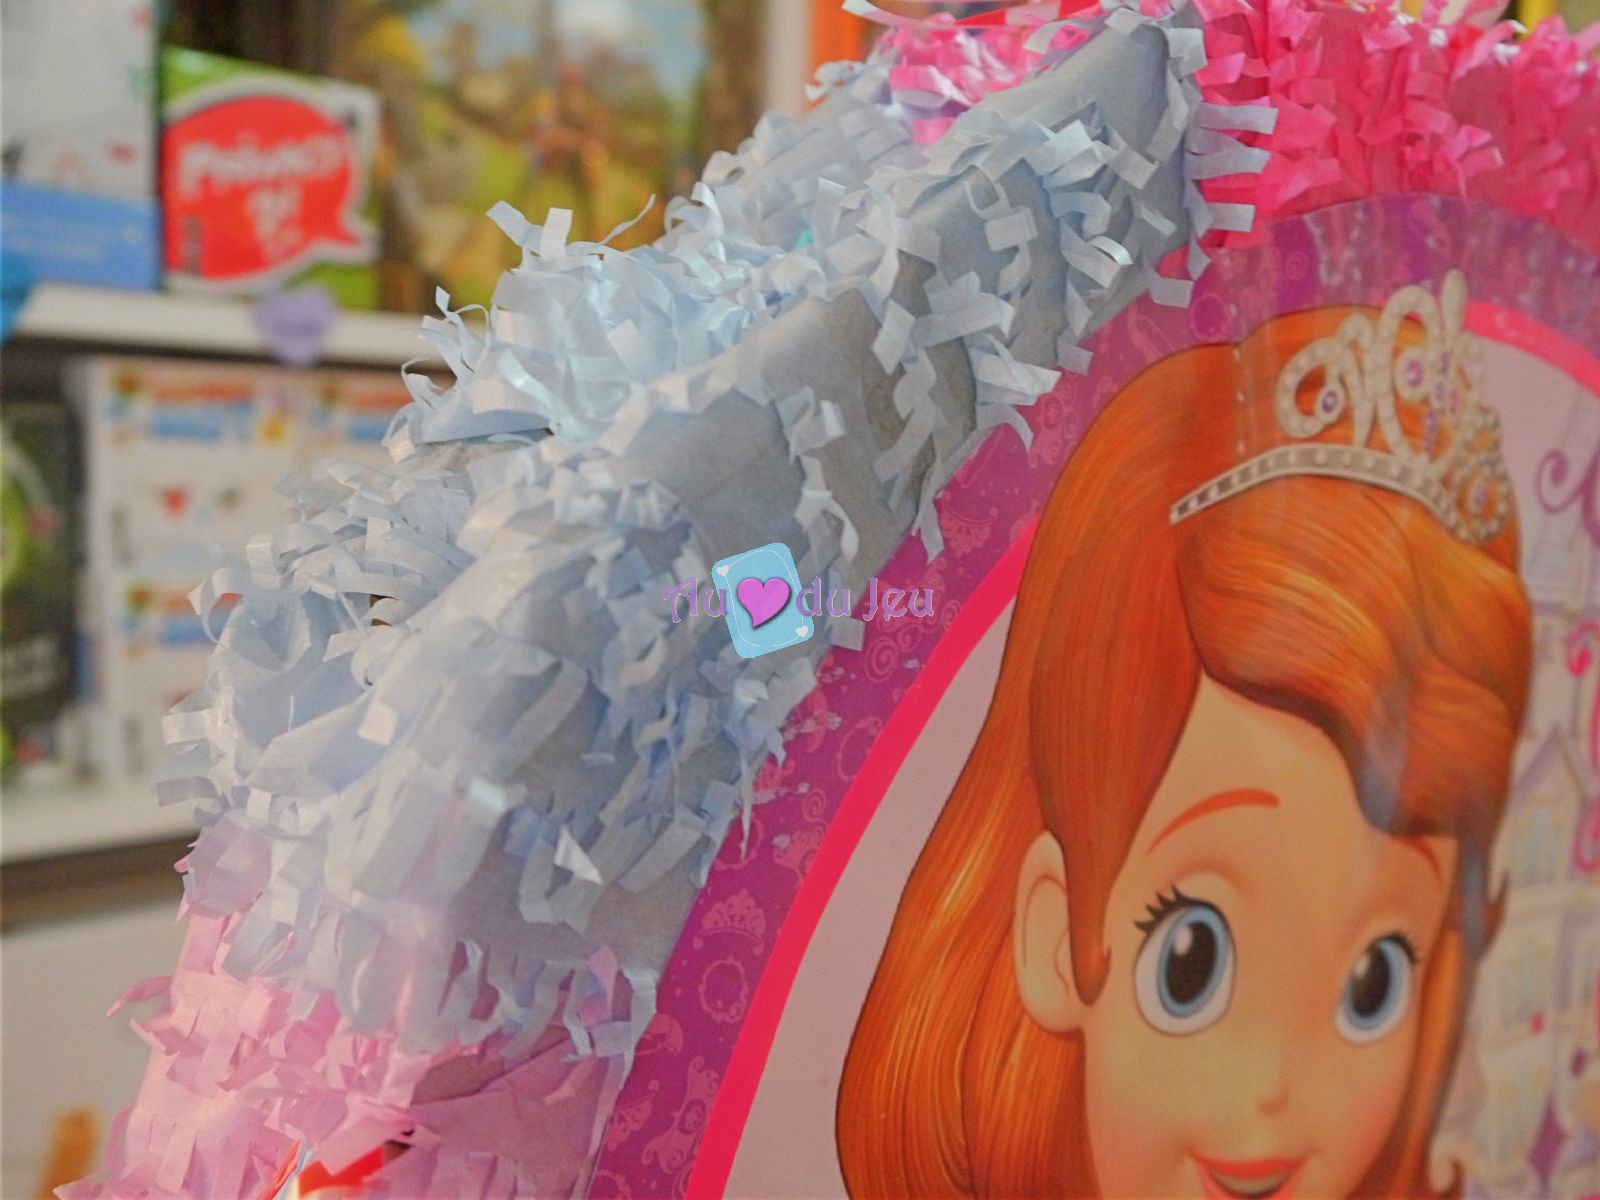 Piñata Princesse Sofia